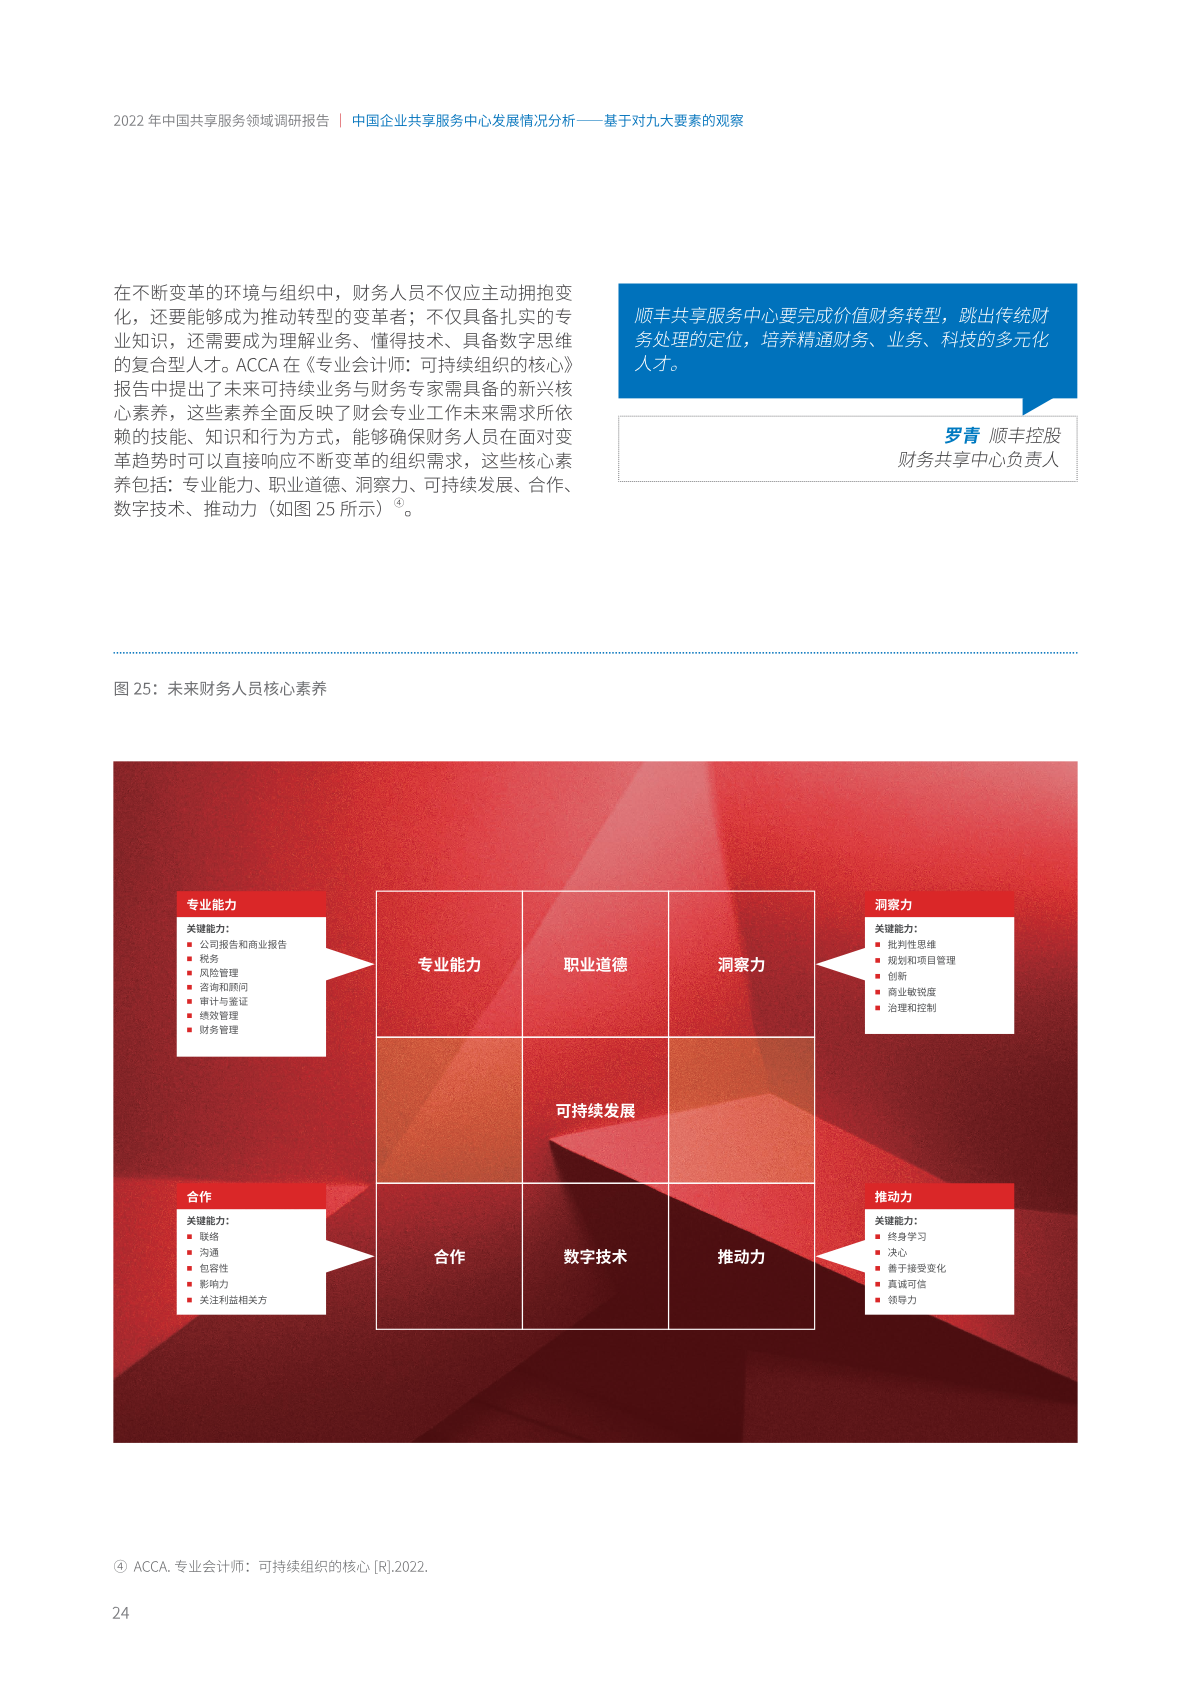 ACCA：2022年中国共享服务领域调研报告（附下载）(图30)